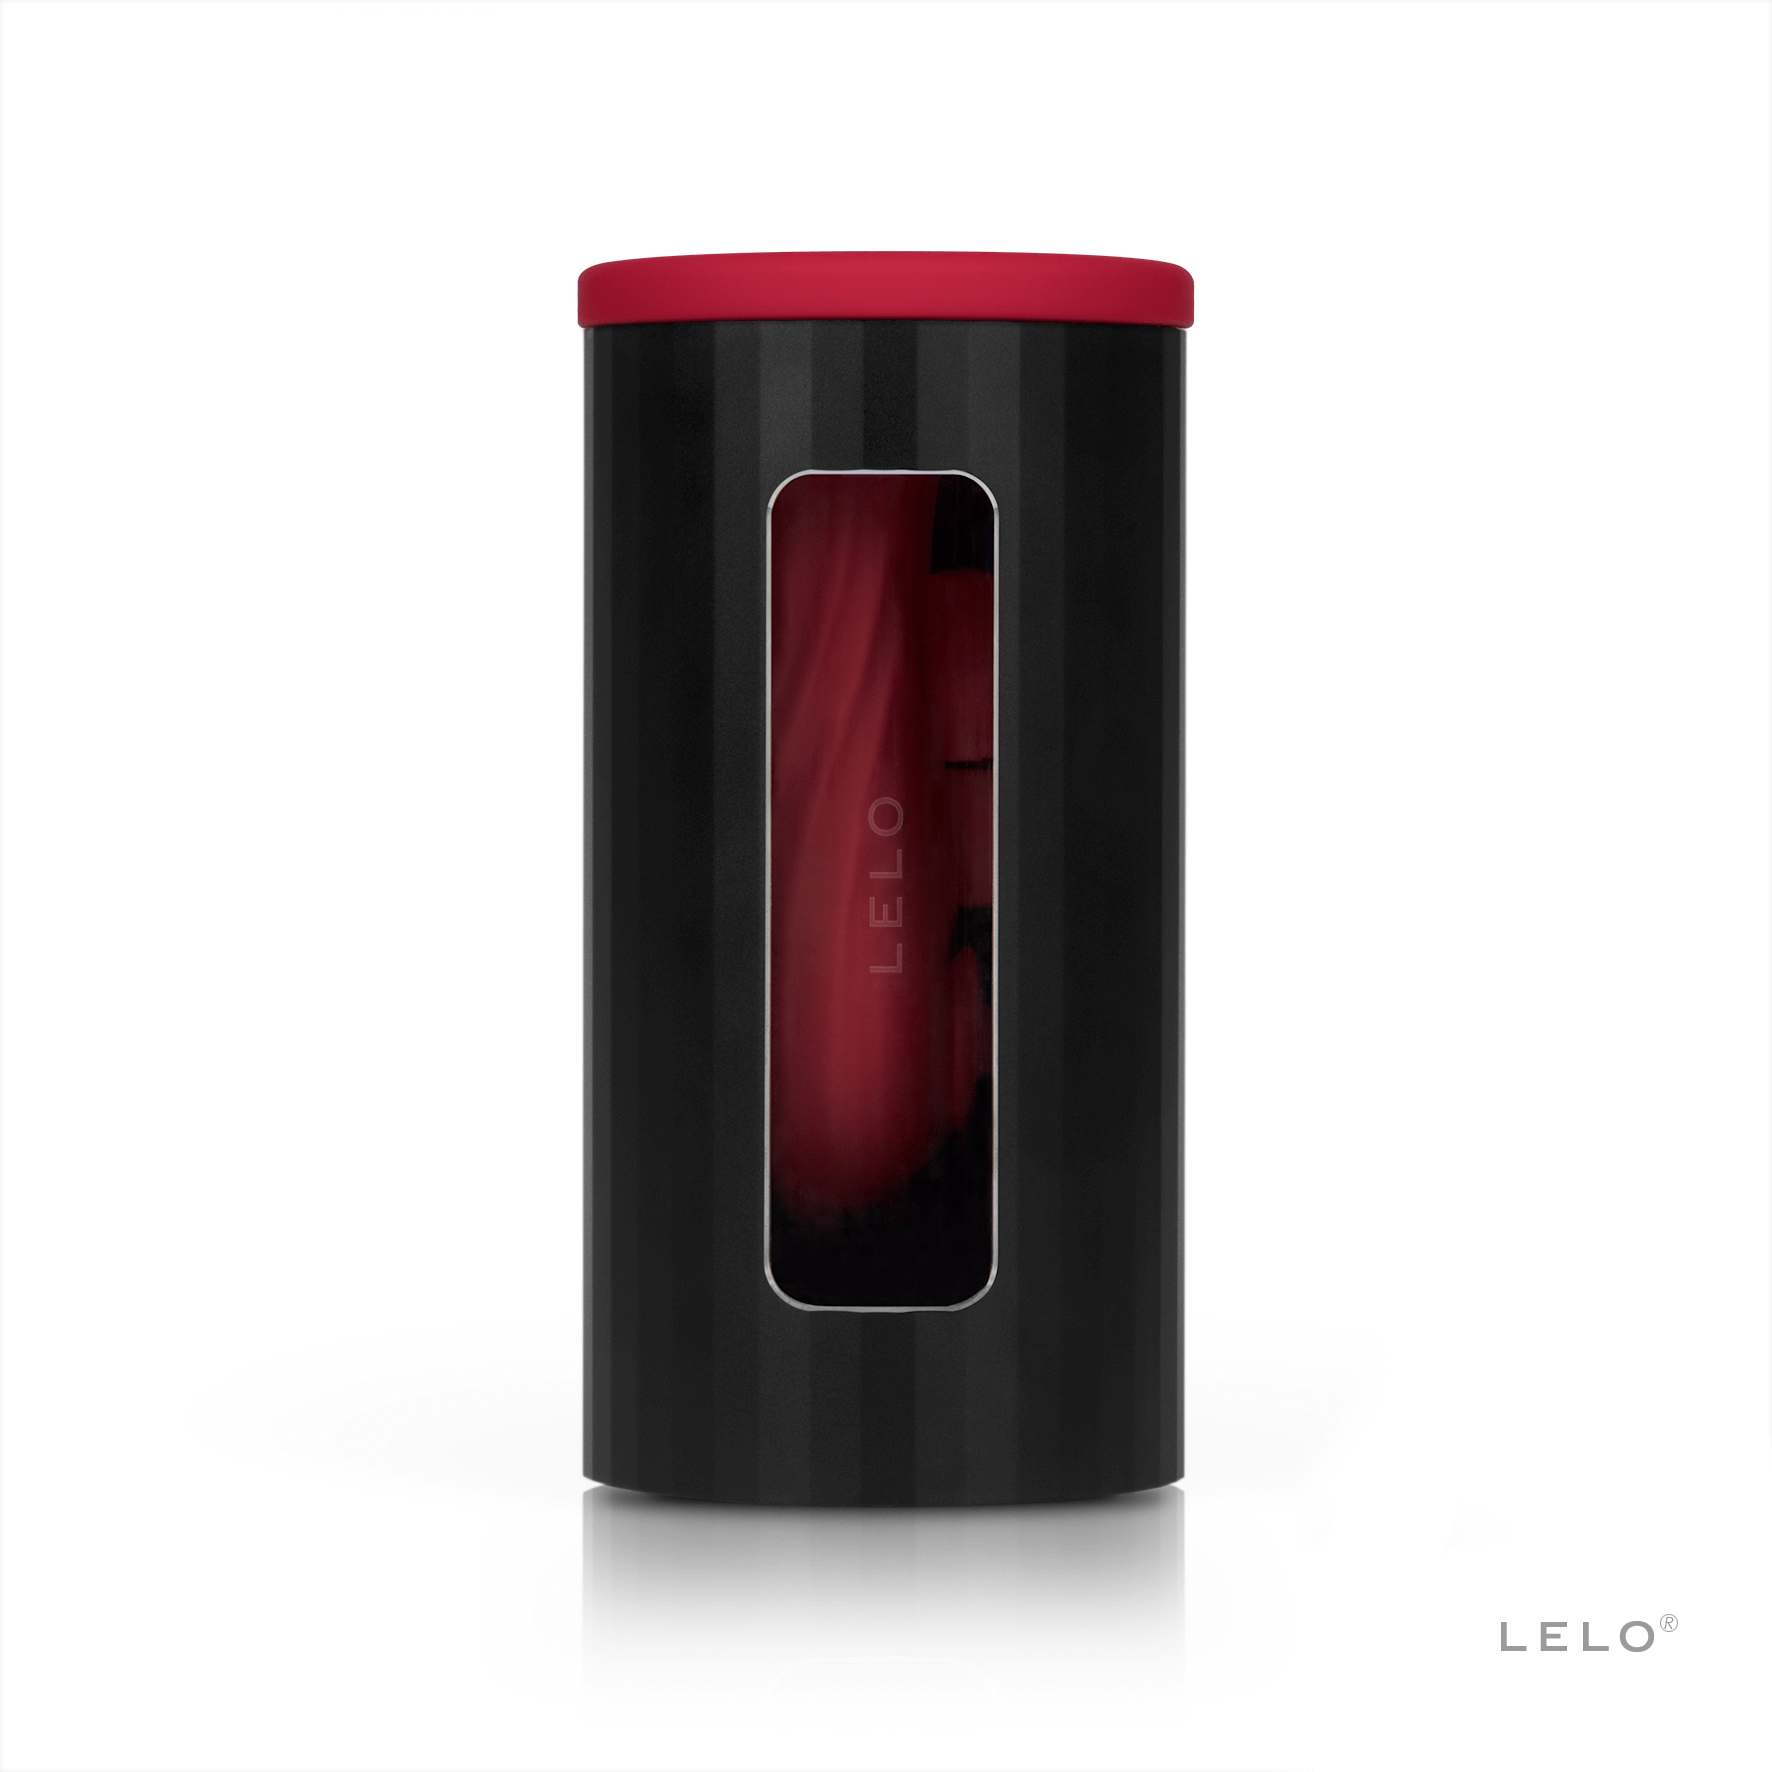 LELO F1s Developer's Kit RED best male sex toy